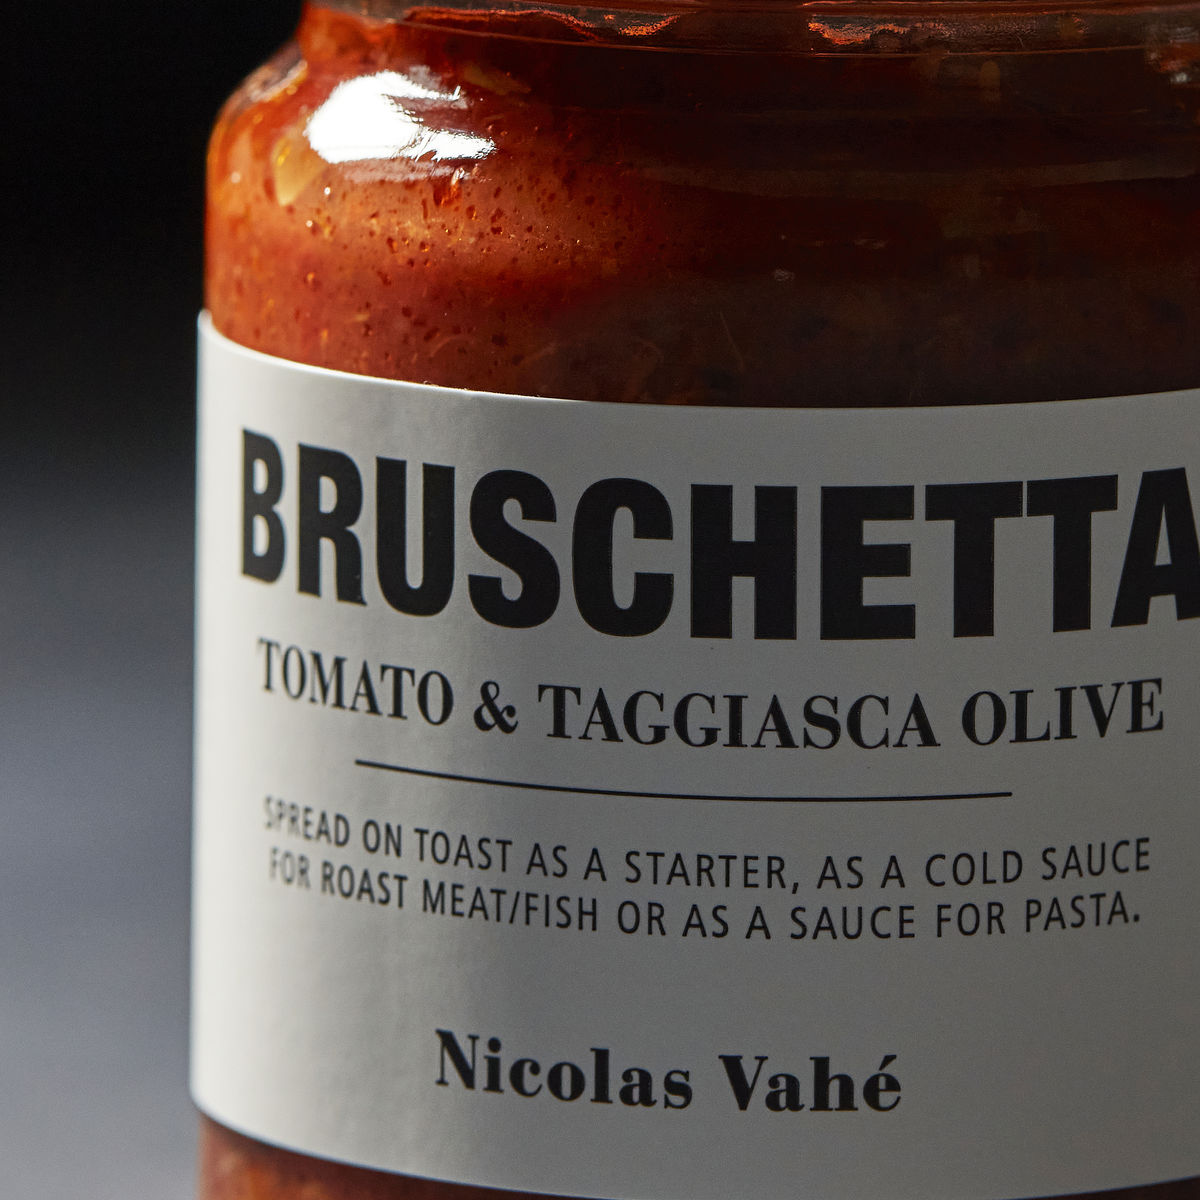 Bruschetta Tomate & Taggiasca Olive